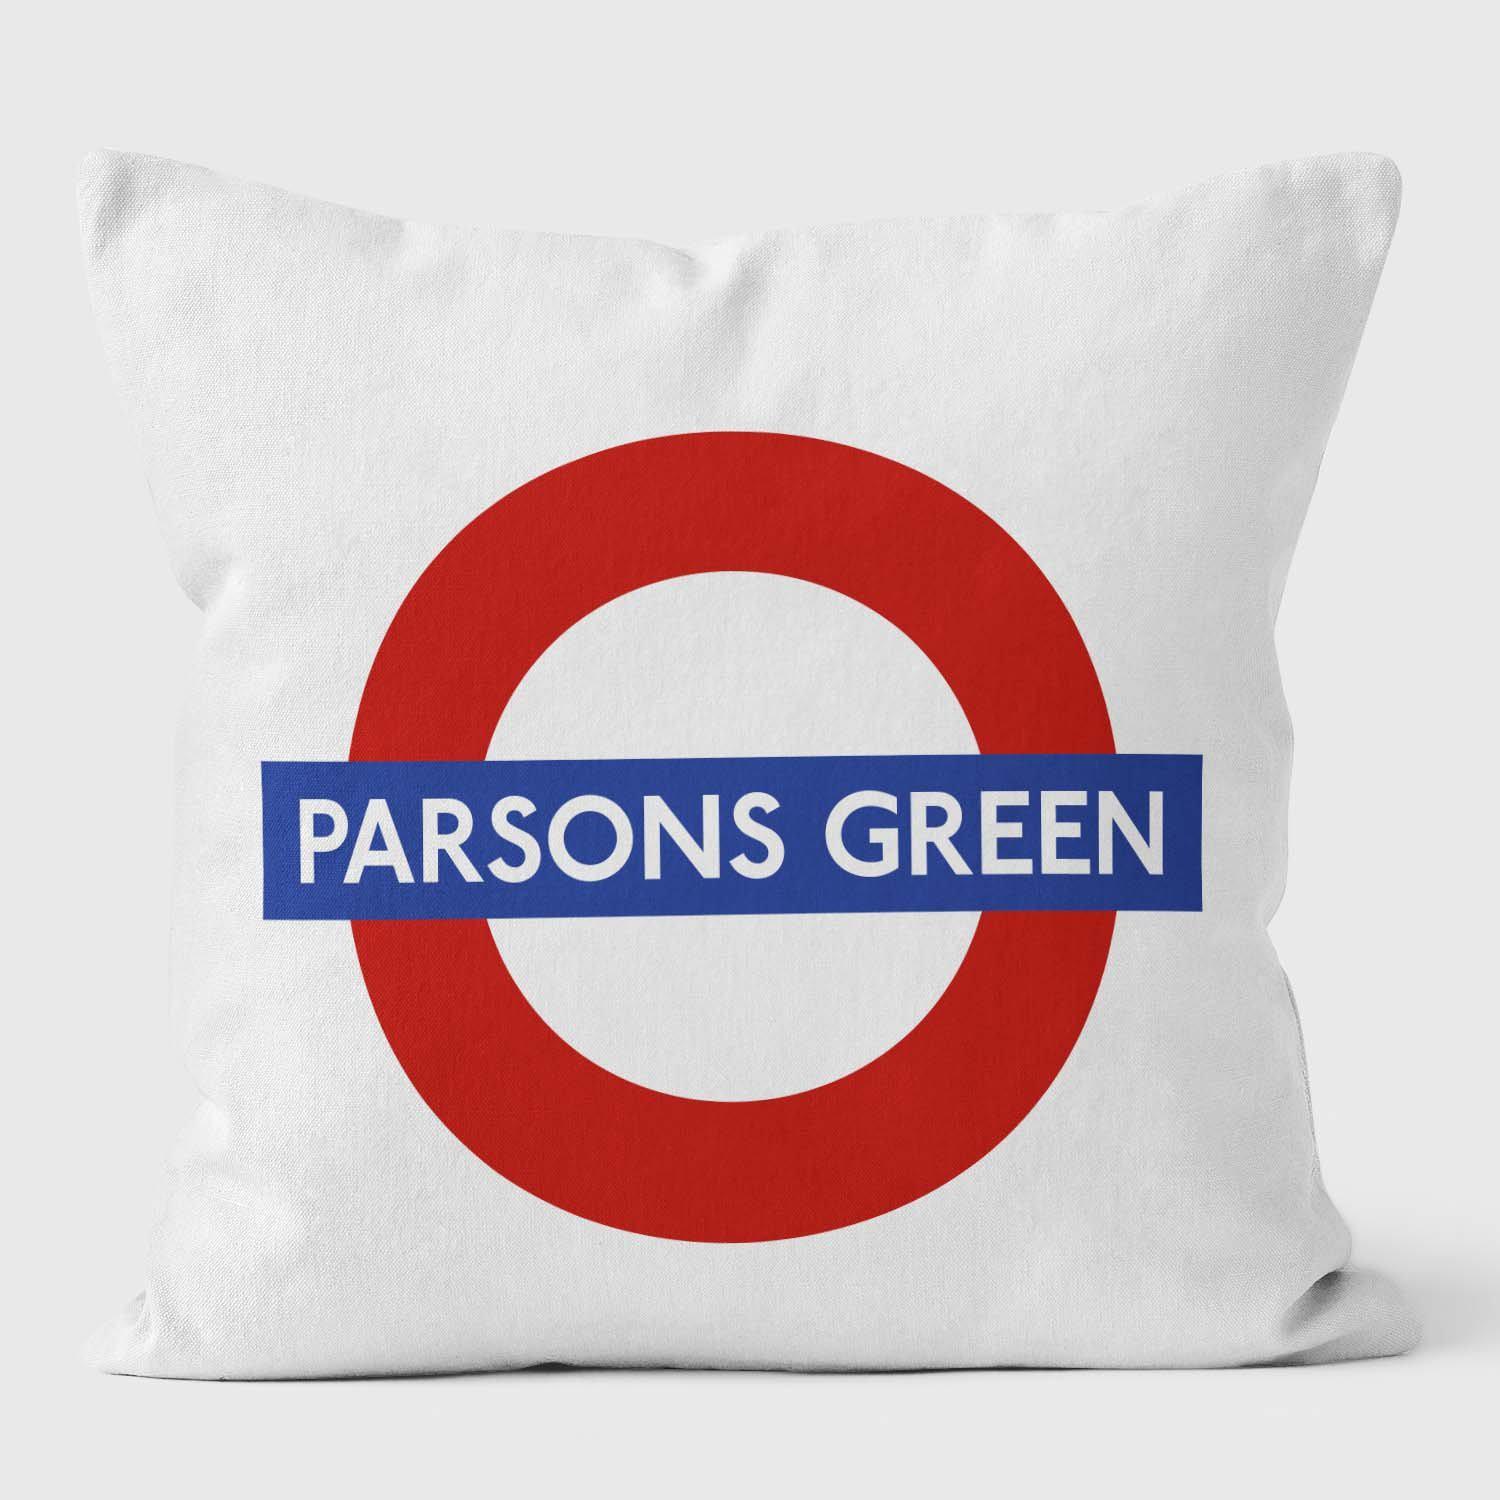 Parsons Green London Underground Tube Station Roundel Cushion - Handmade Cushions UK - WeLoveCushions